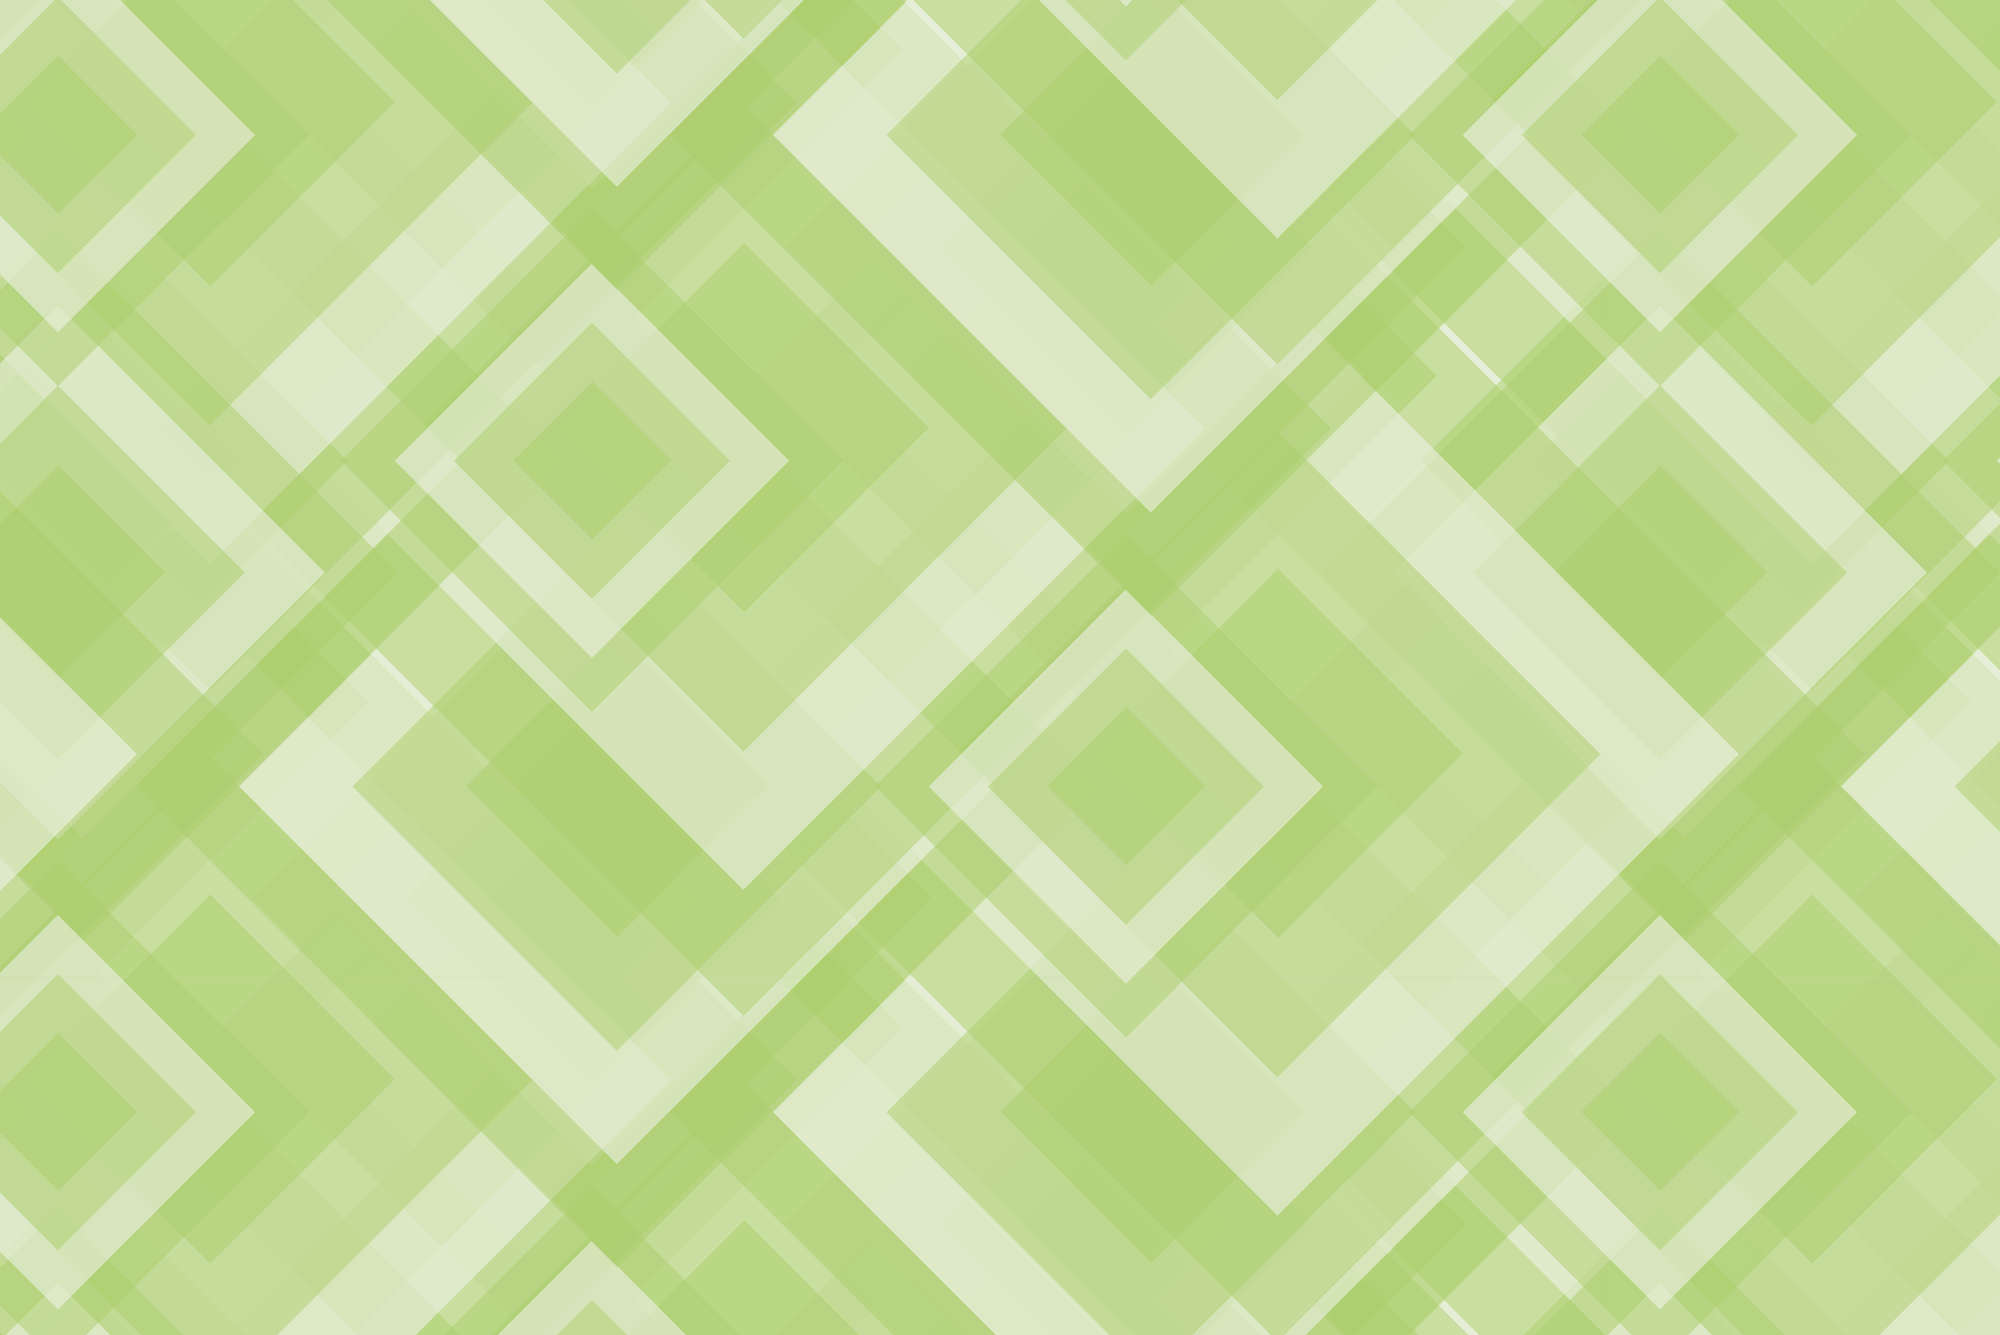             Design Fototapete überlappende Quadrate grün auf Perlmutt Glattvlies
        